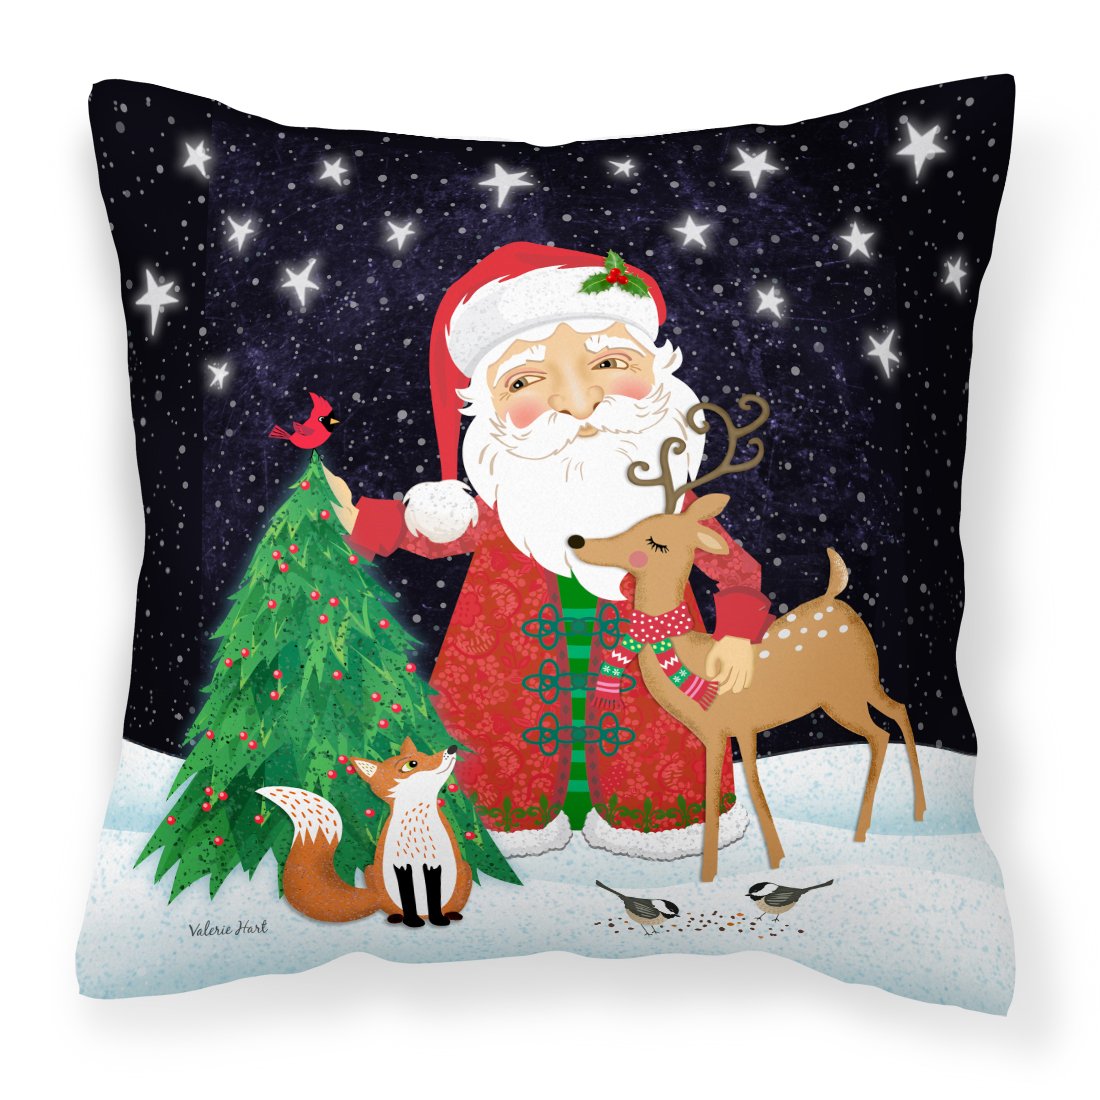 Santa Claus Christmas Fabric Decorative Pillow VHA3033PW1818 by Caroline's Treasures